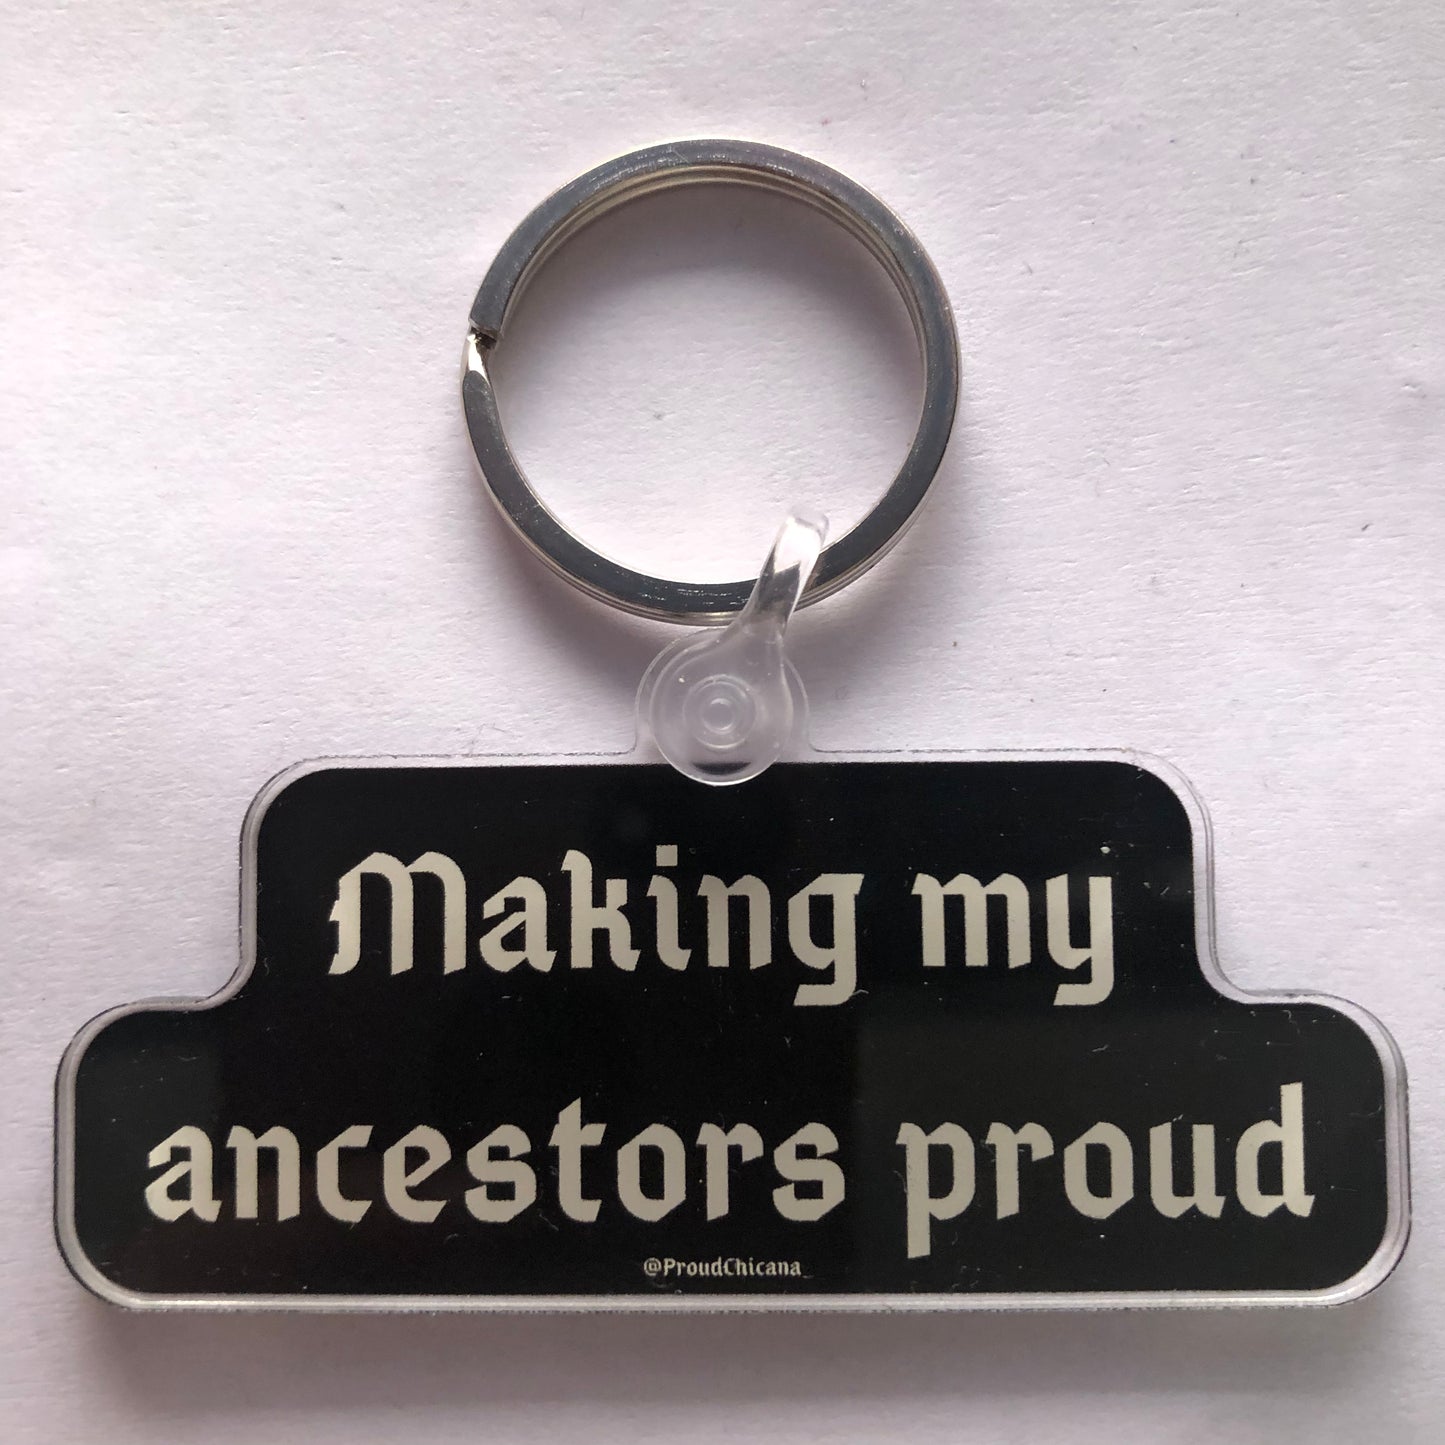 Making my ancestors proud keychain